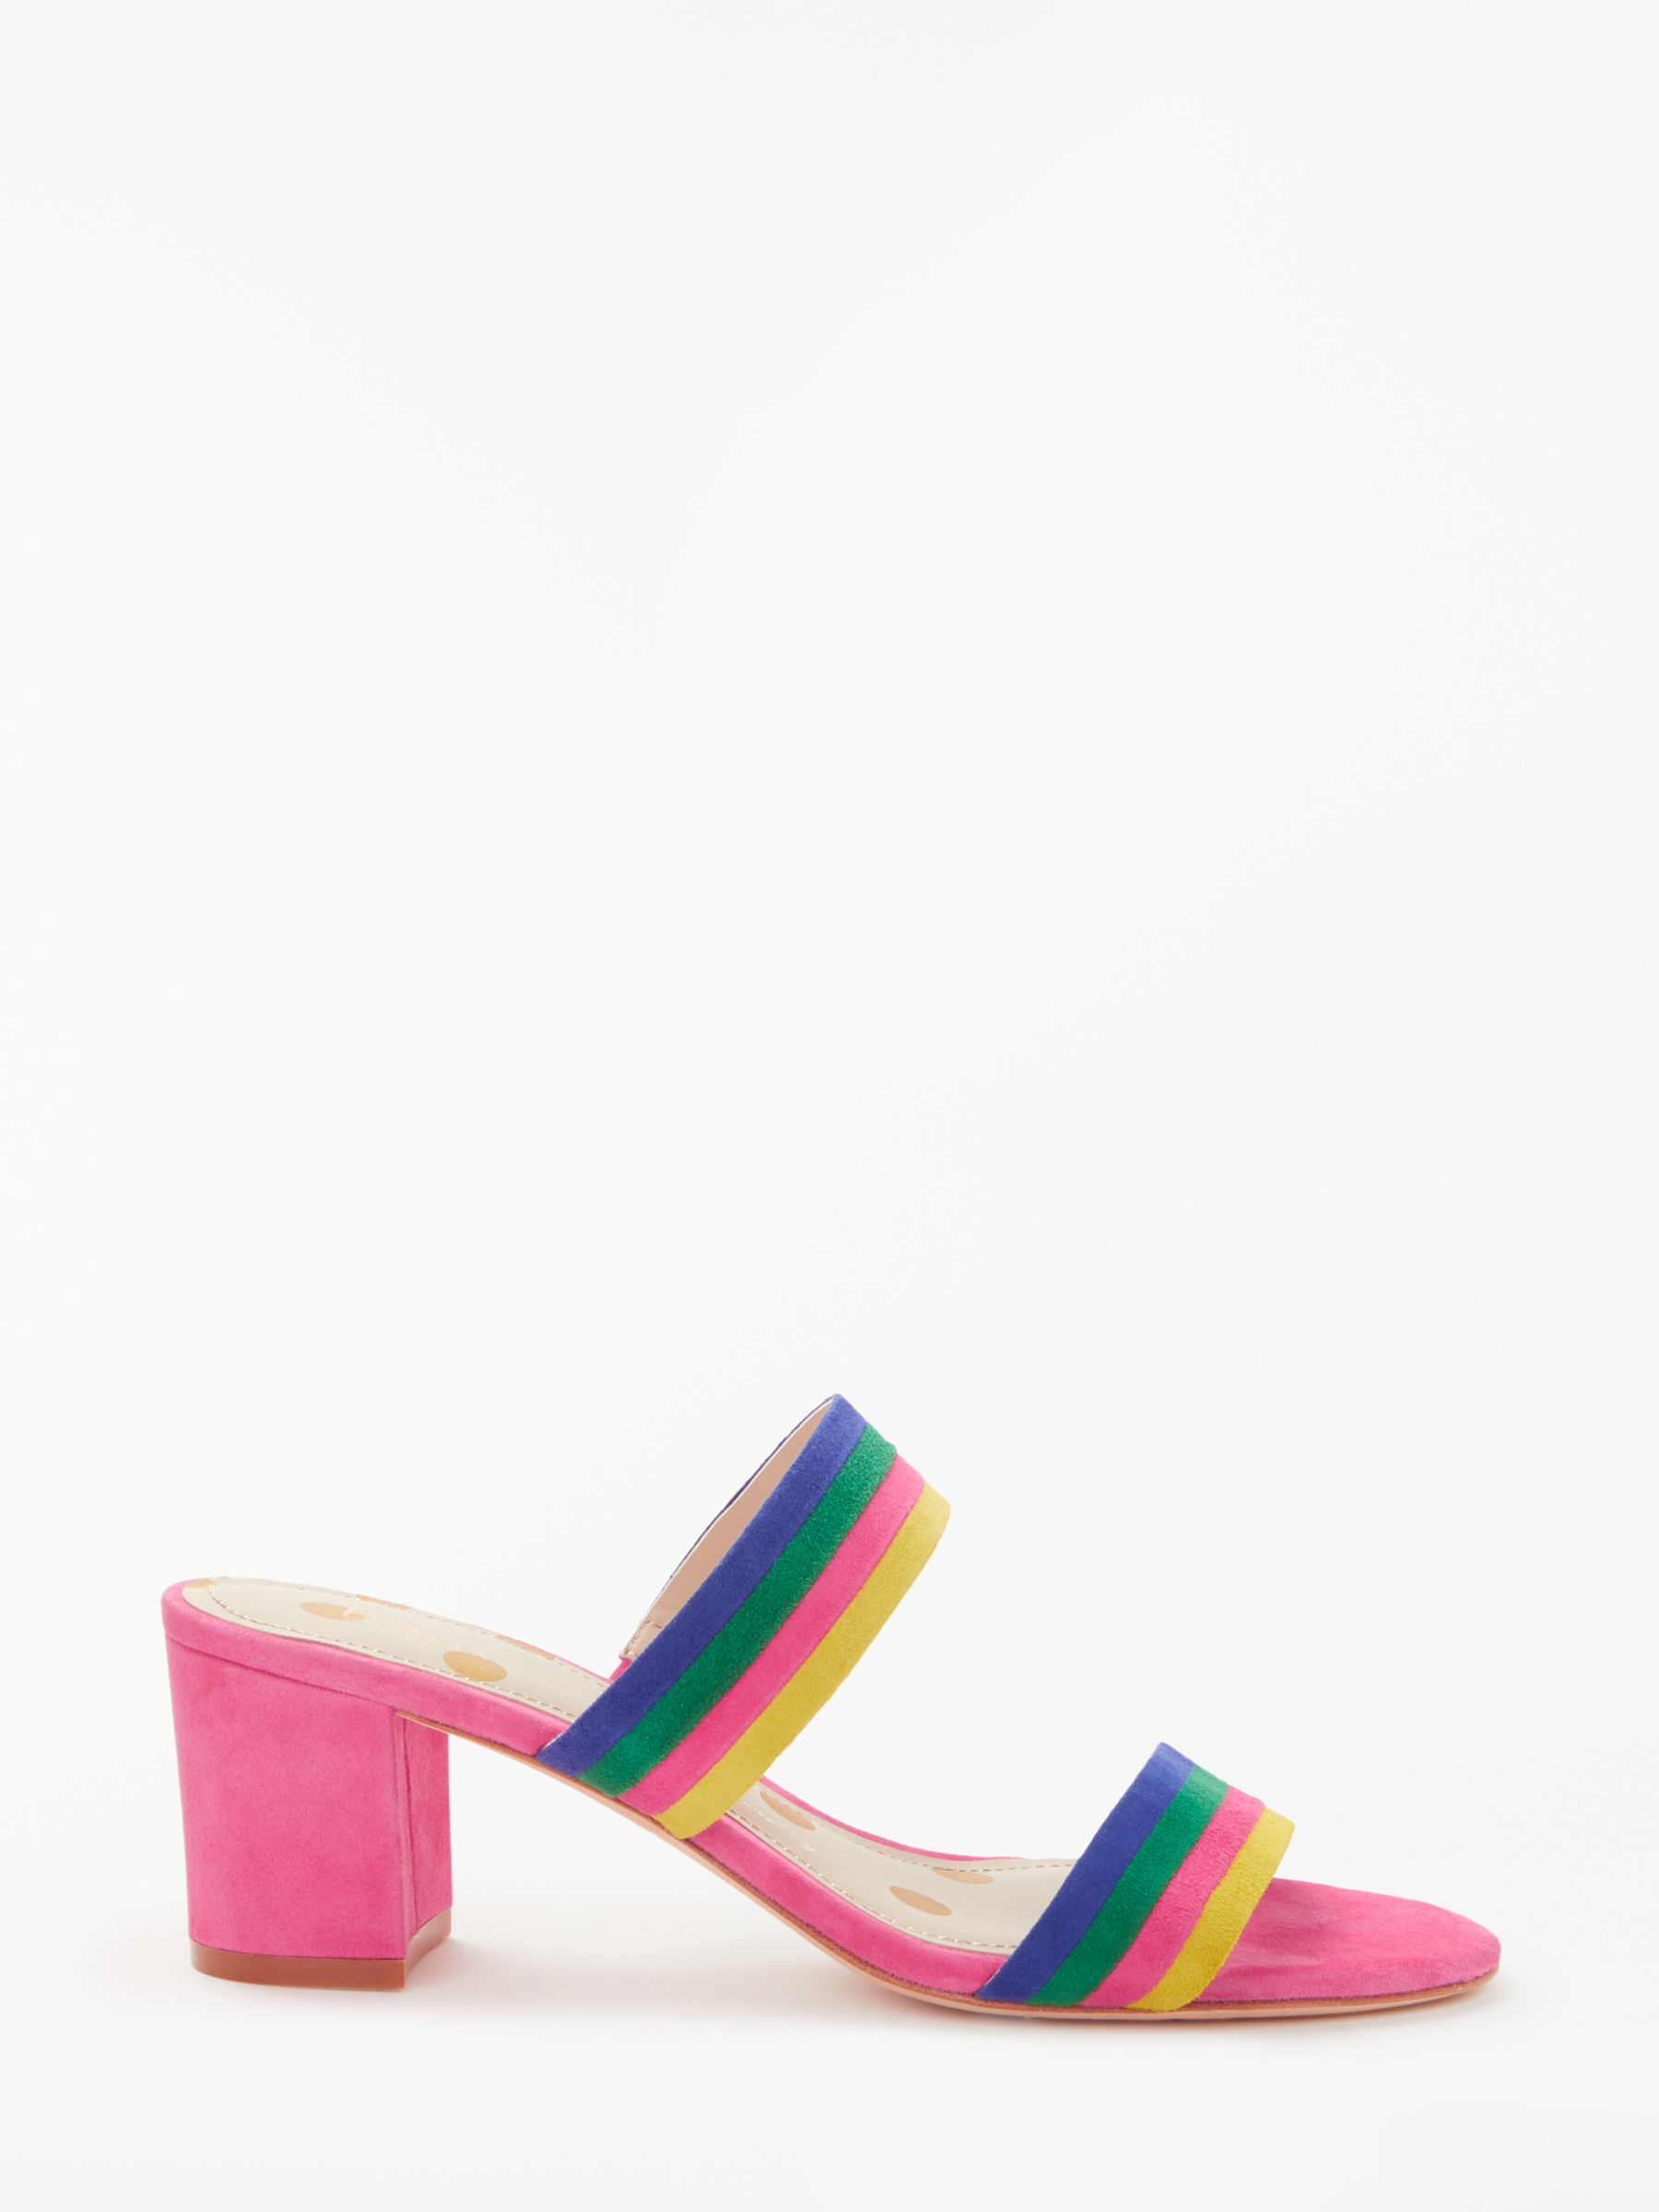 Boden Orella Suede Mule Sandals, Pink/Multi